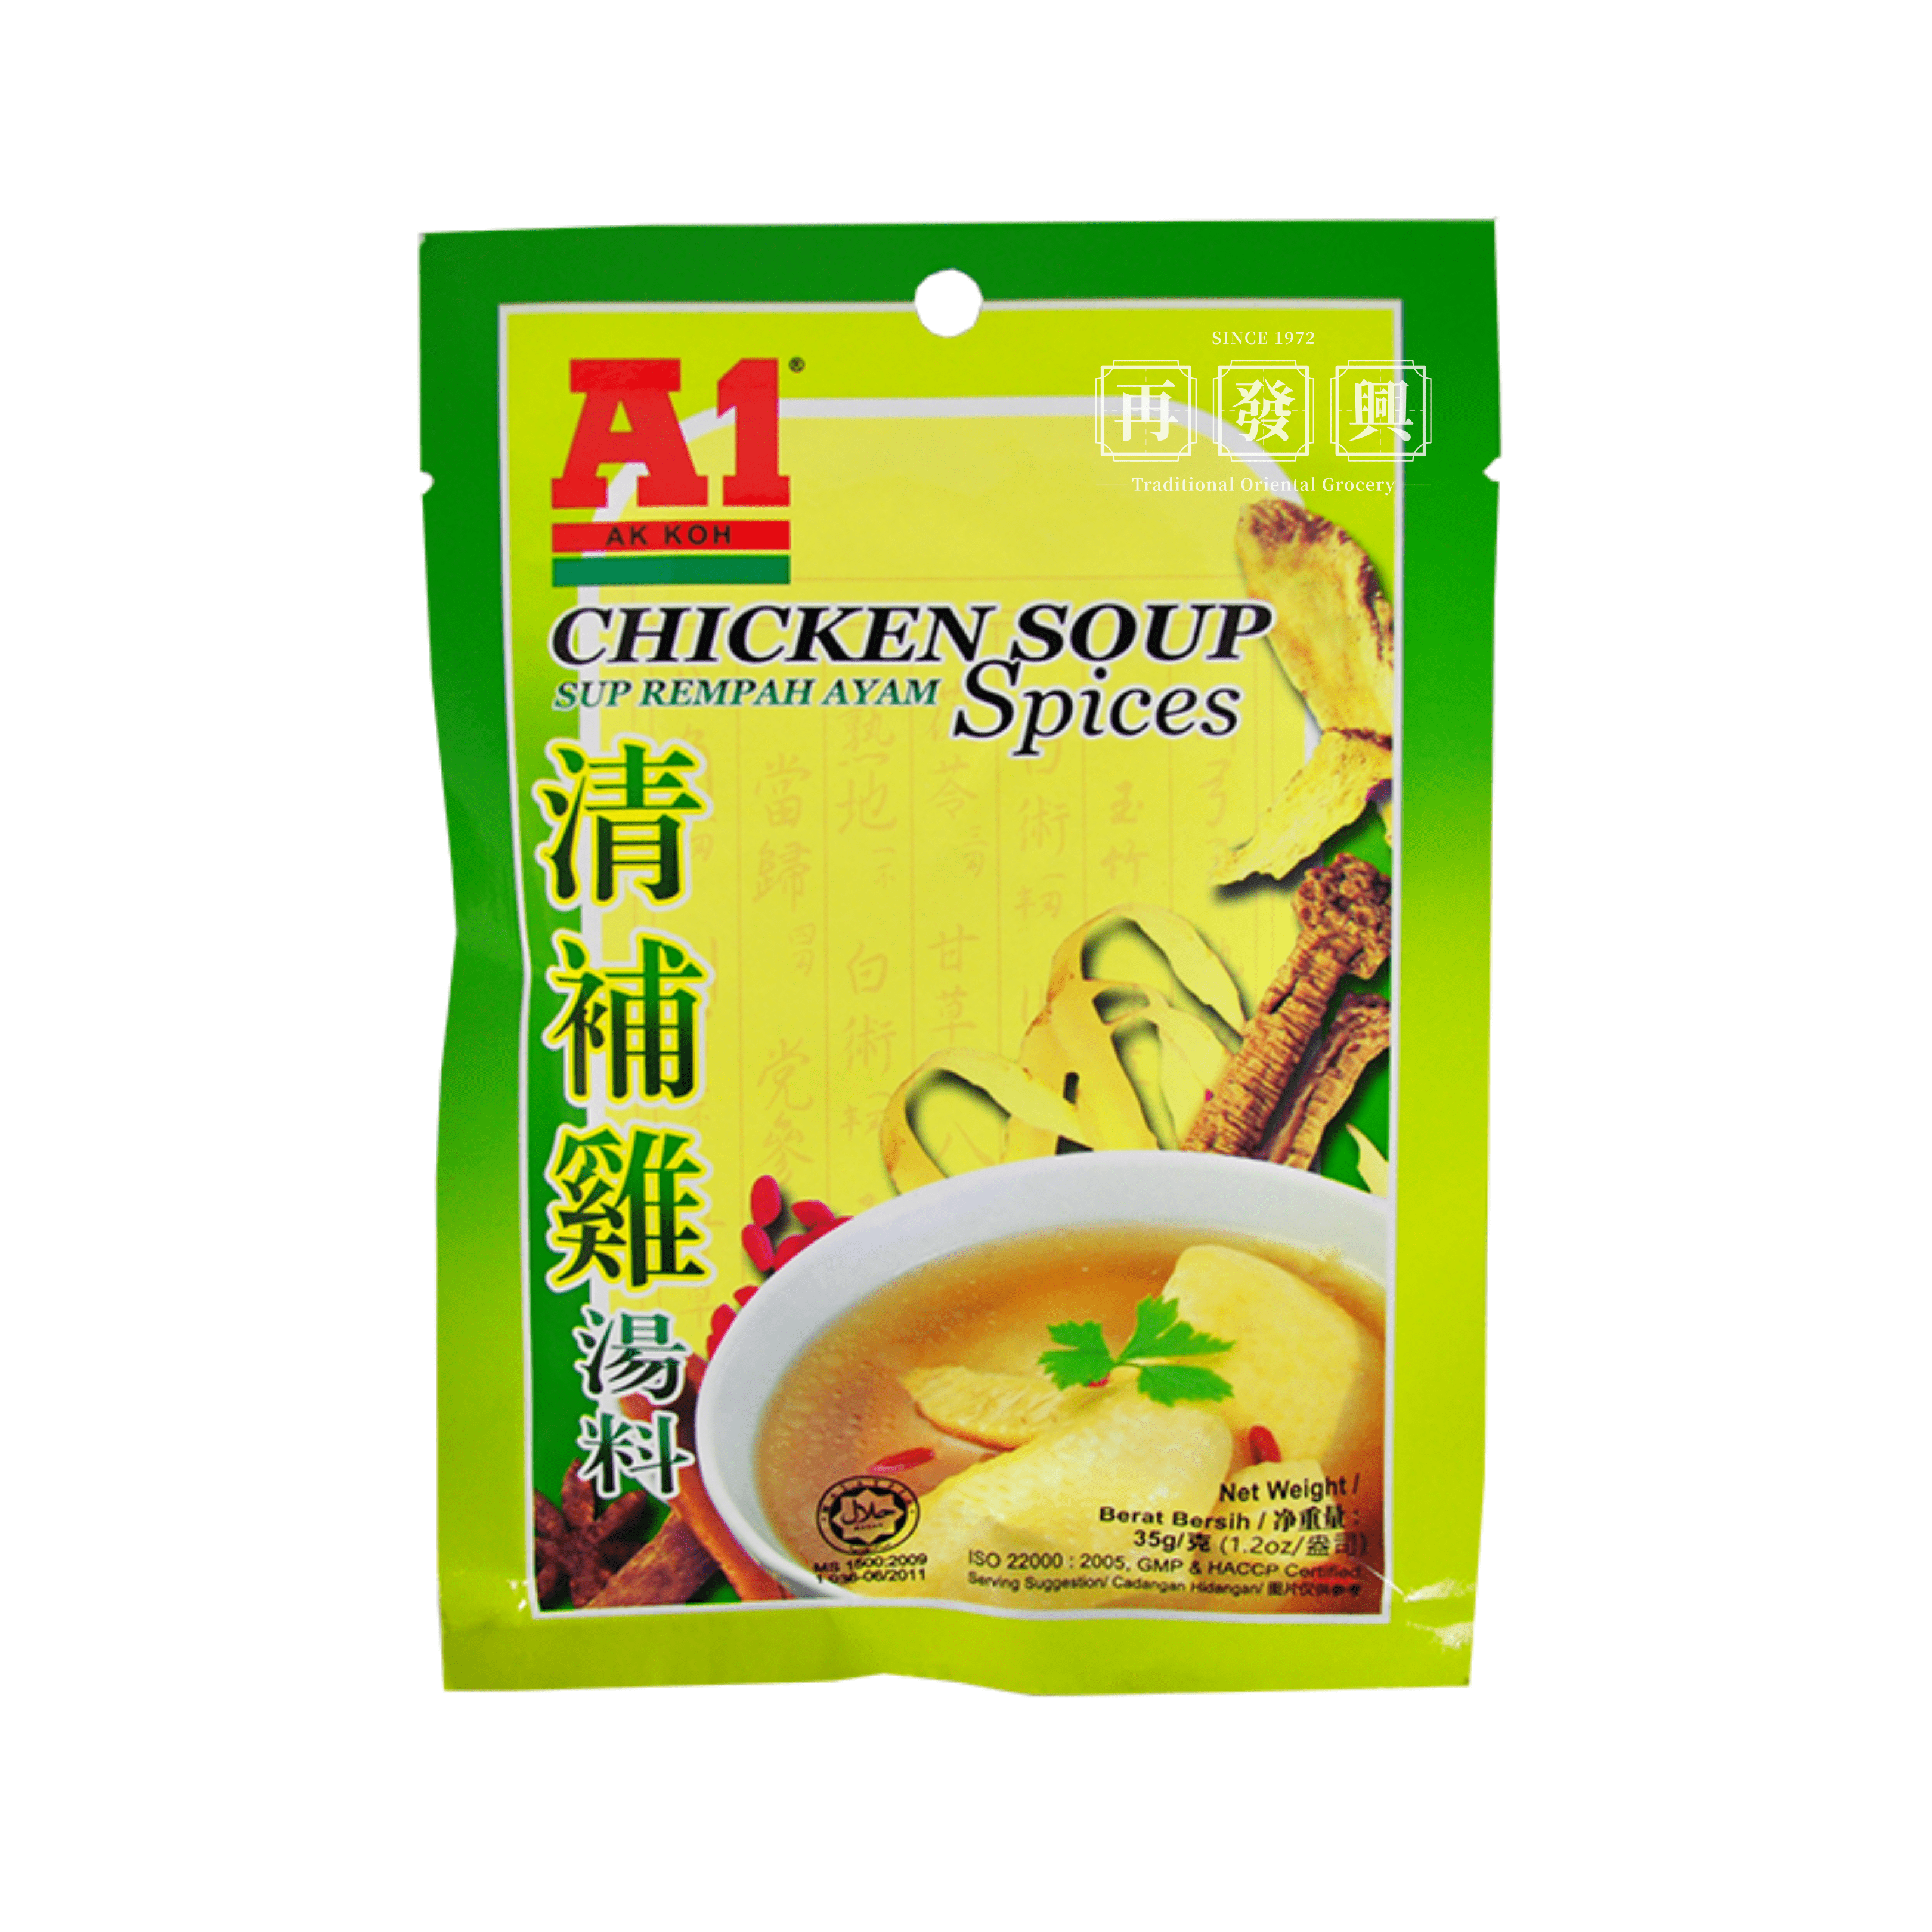 A1 Chicken Soup 35g